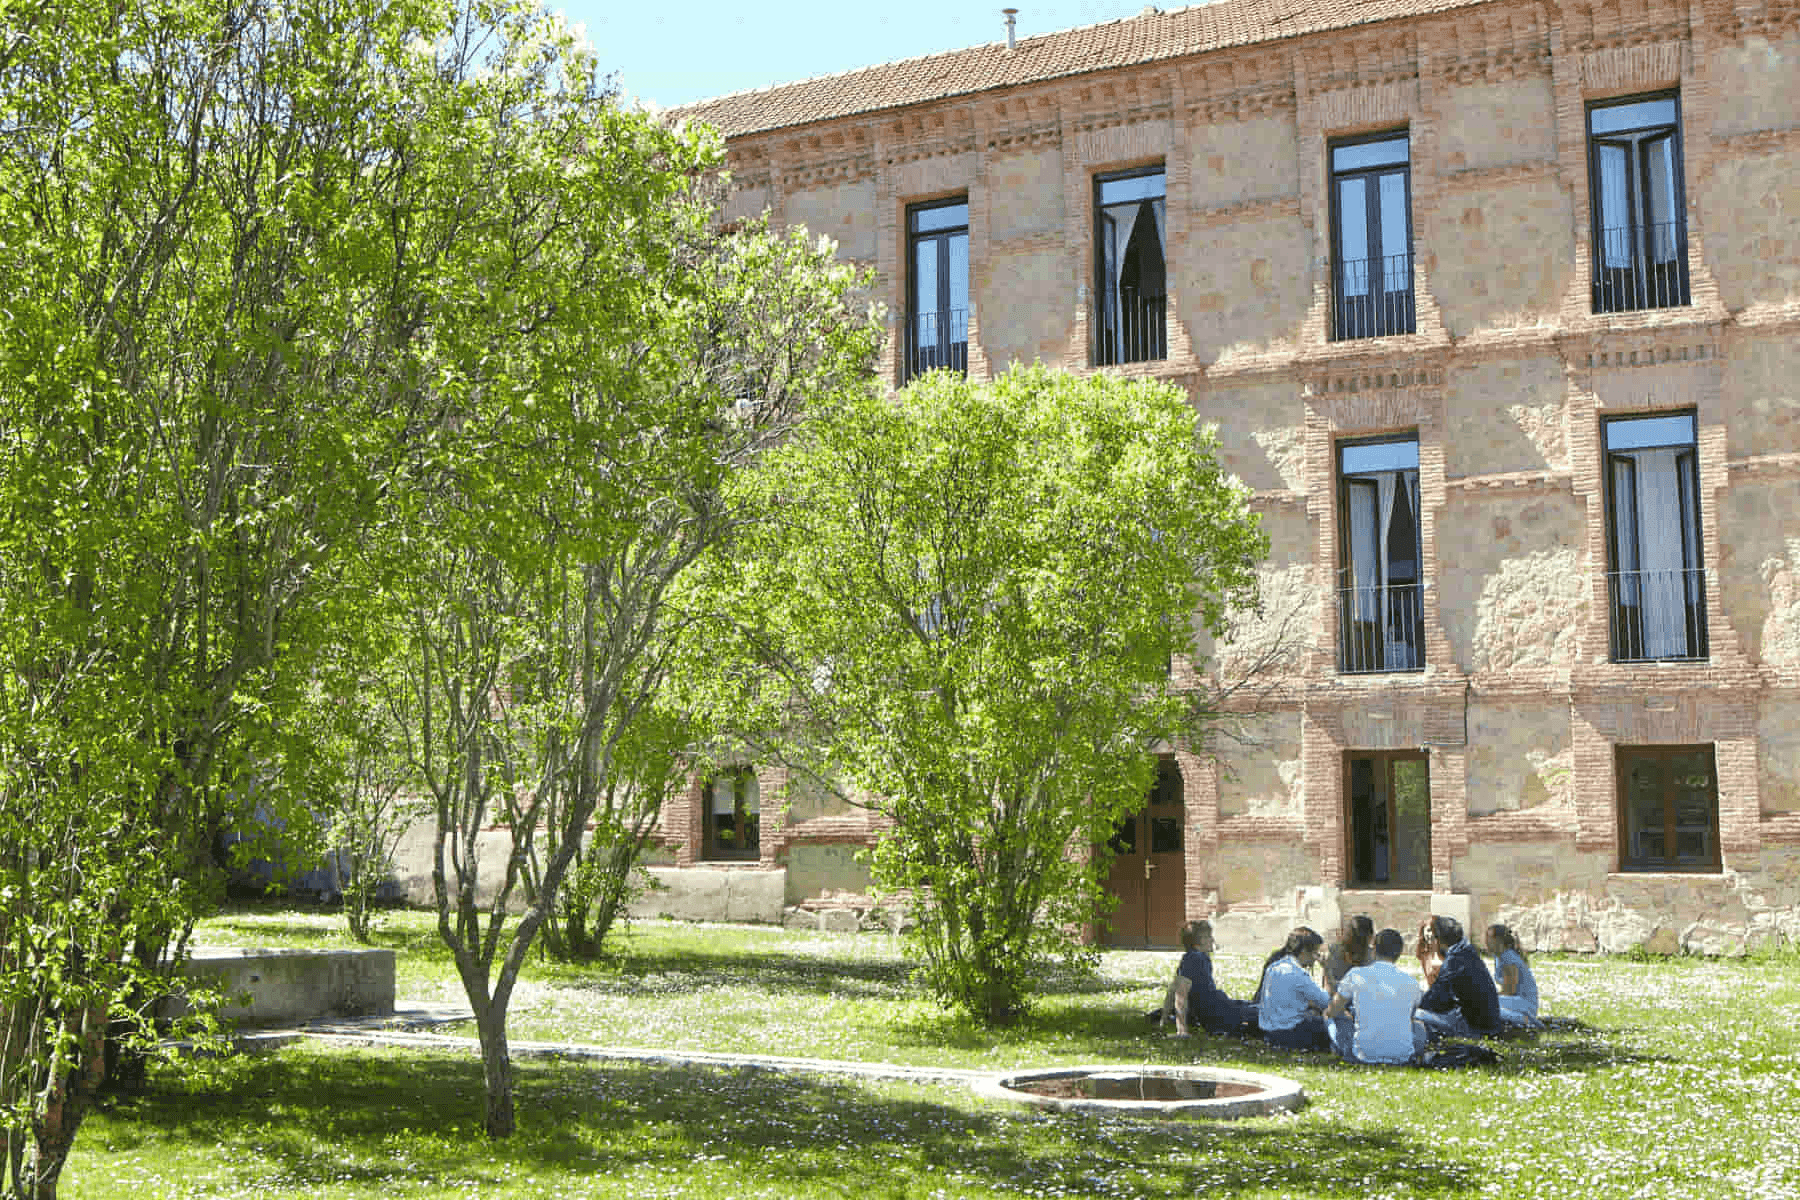 IE University garden from Segovia campus